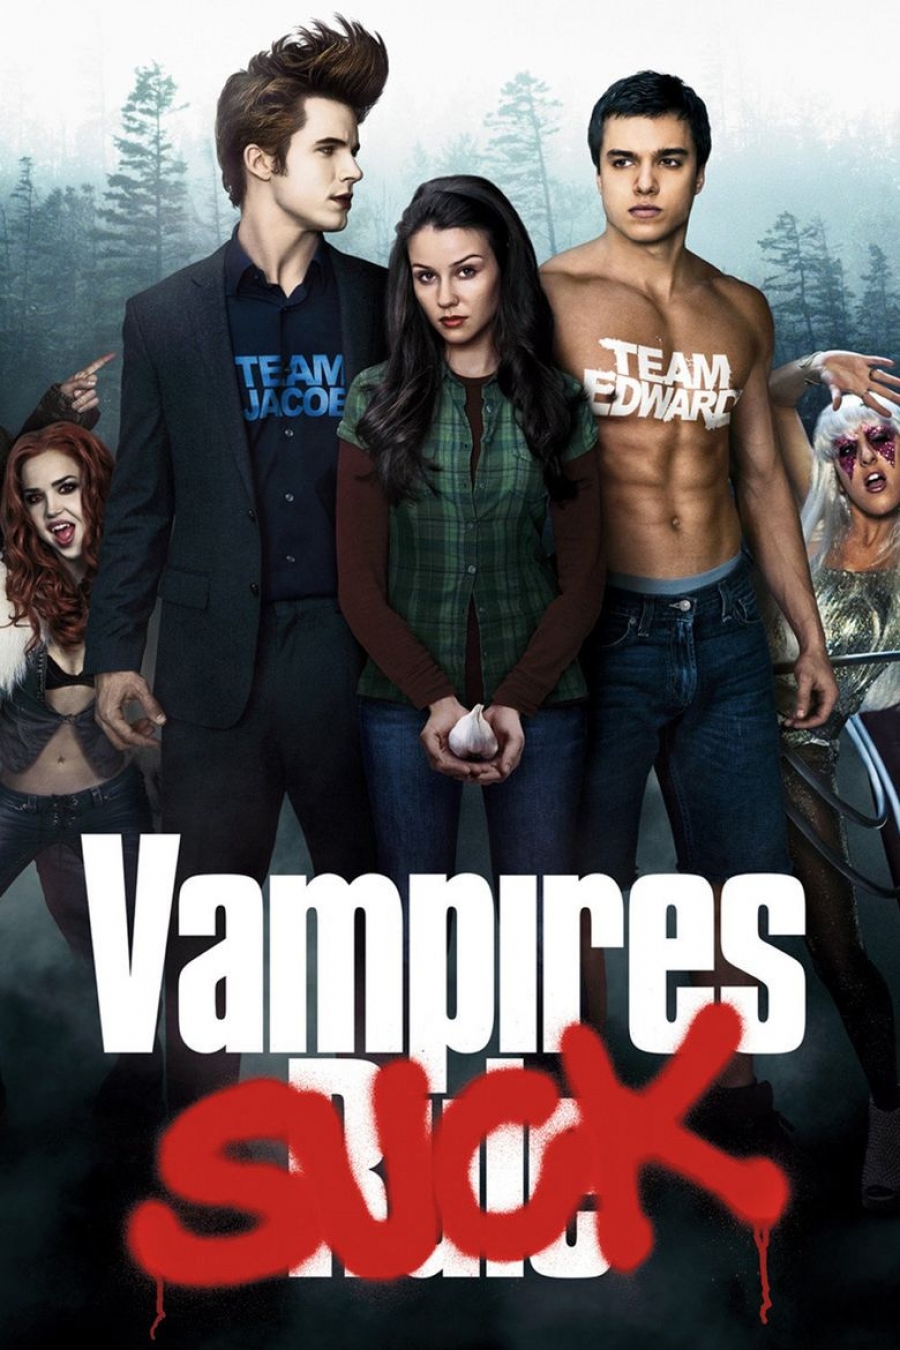 Vampires Suck (2010) ยำแวมไพร์สุดมันส์ - ดูหนังออนไลน